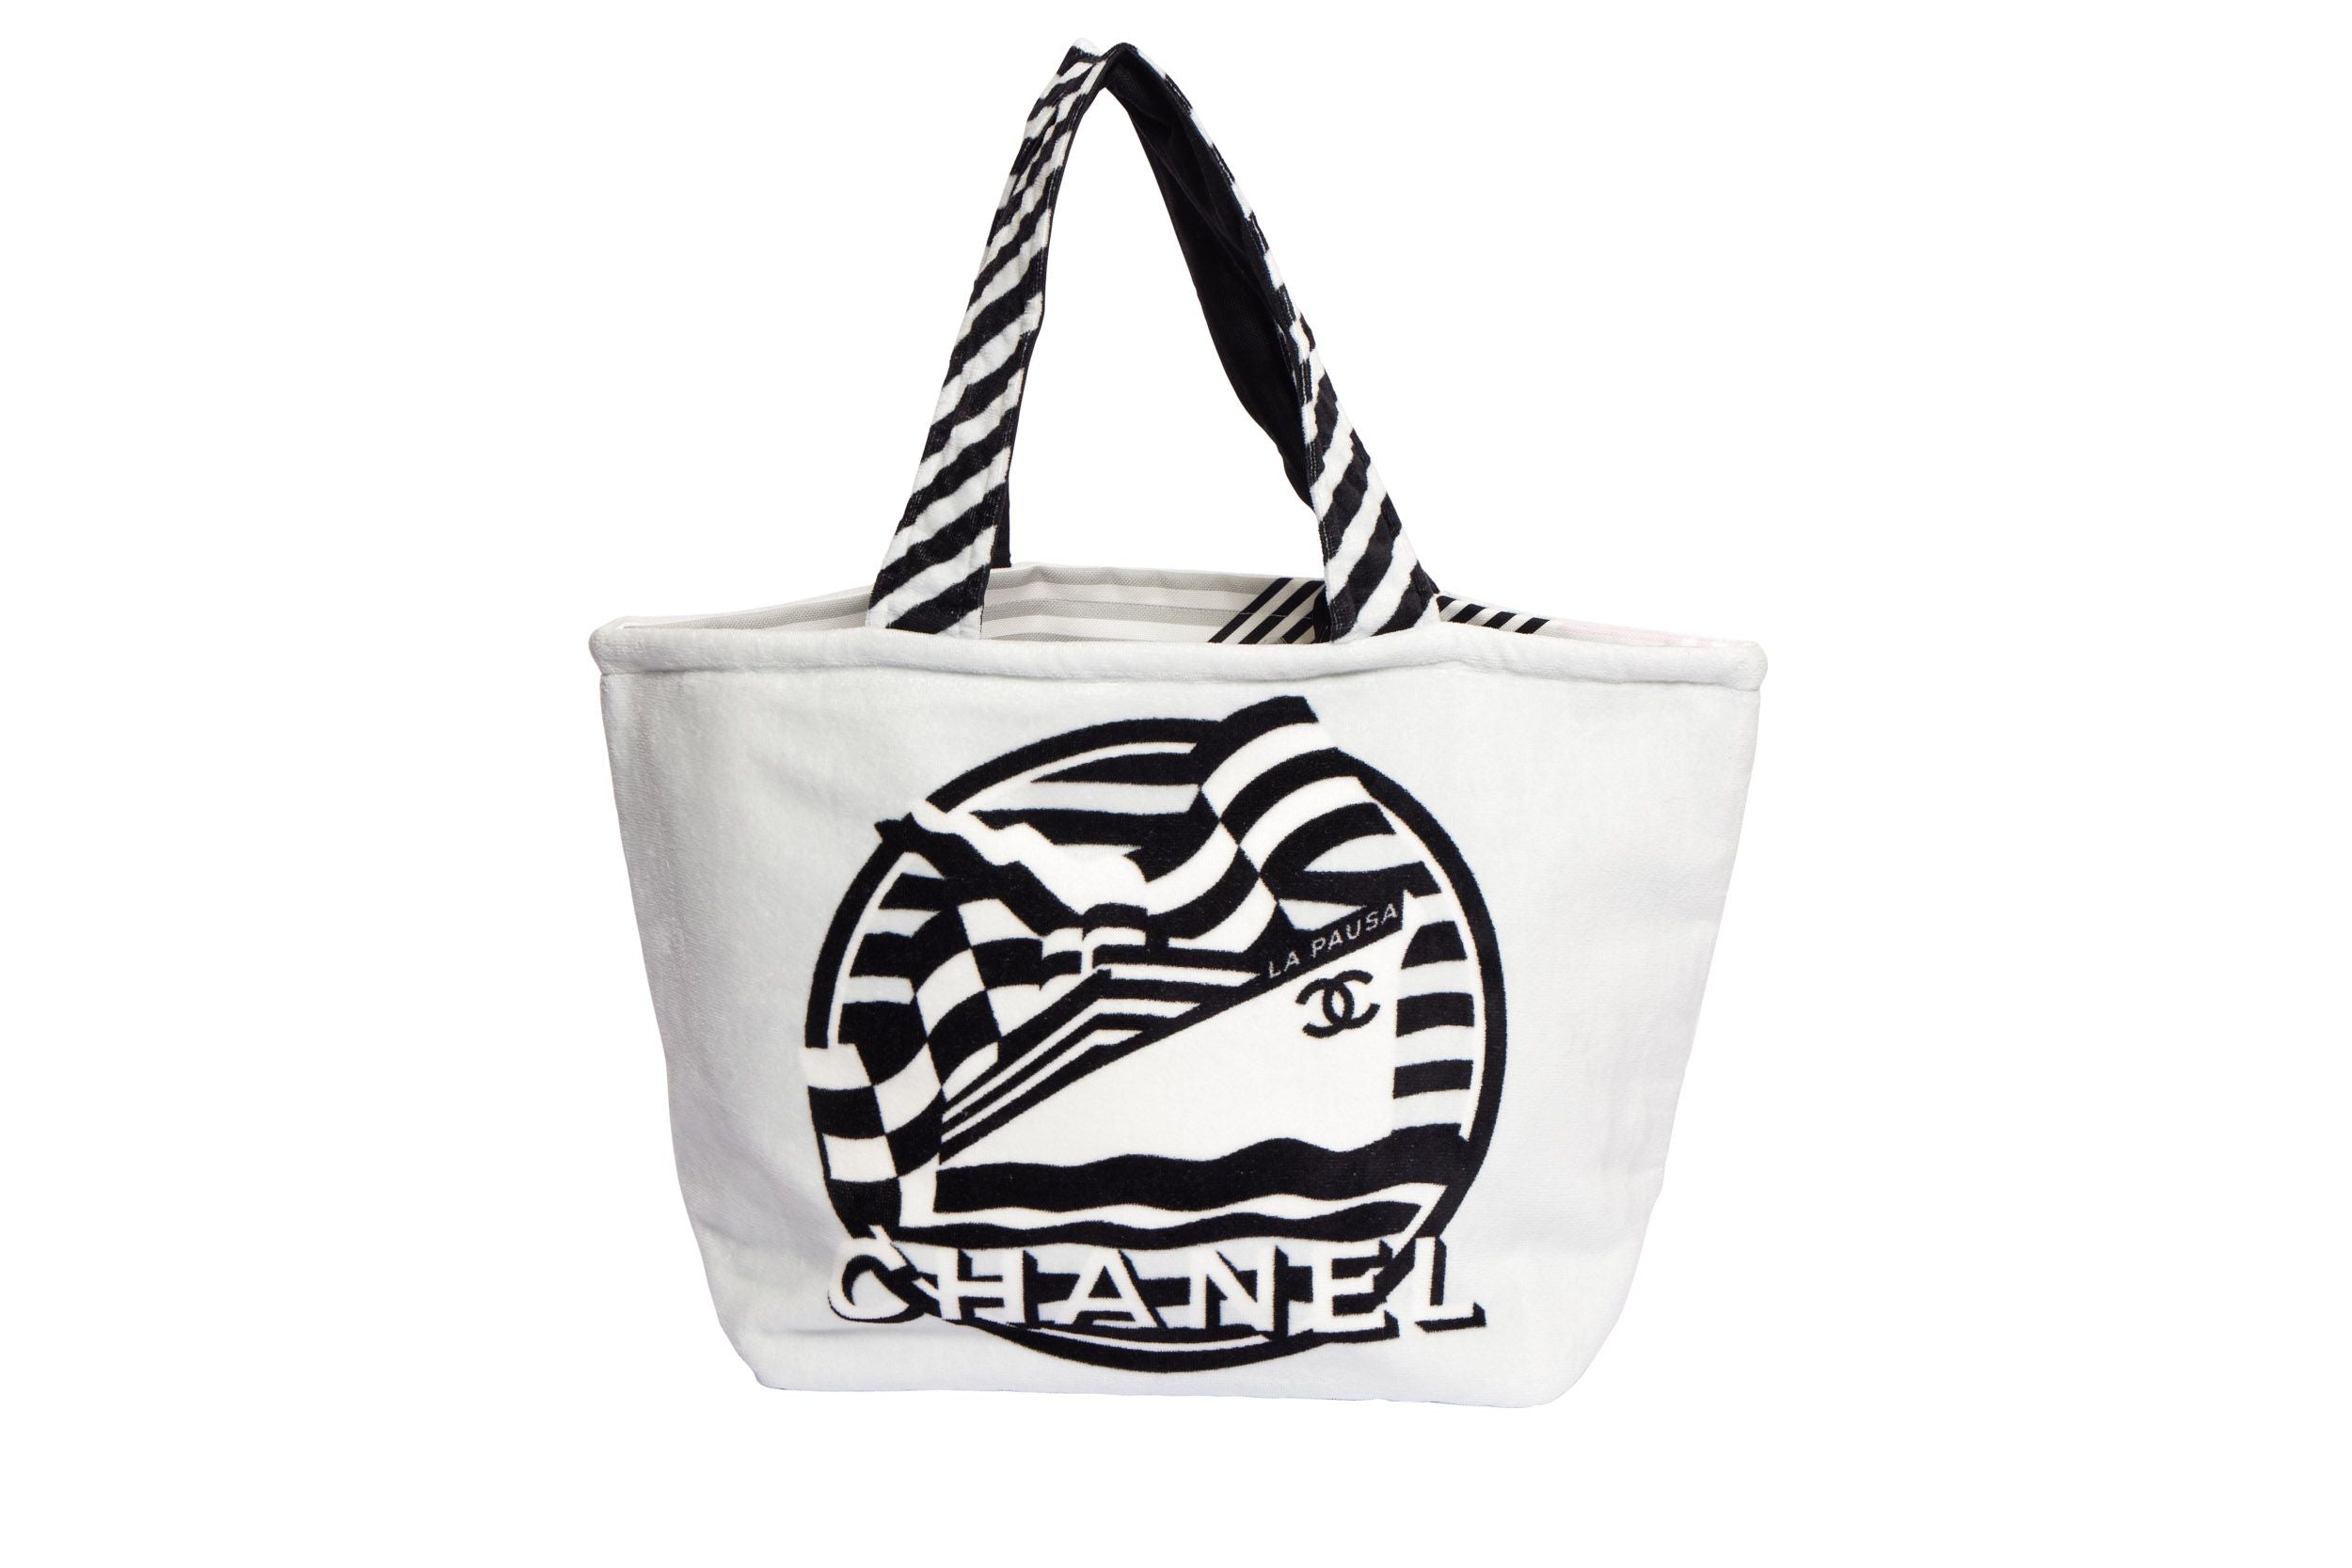 CHANEL/LA PAUSA Logo chain shoulder bag vinyl Black/White/Silver